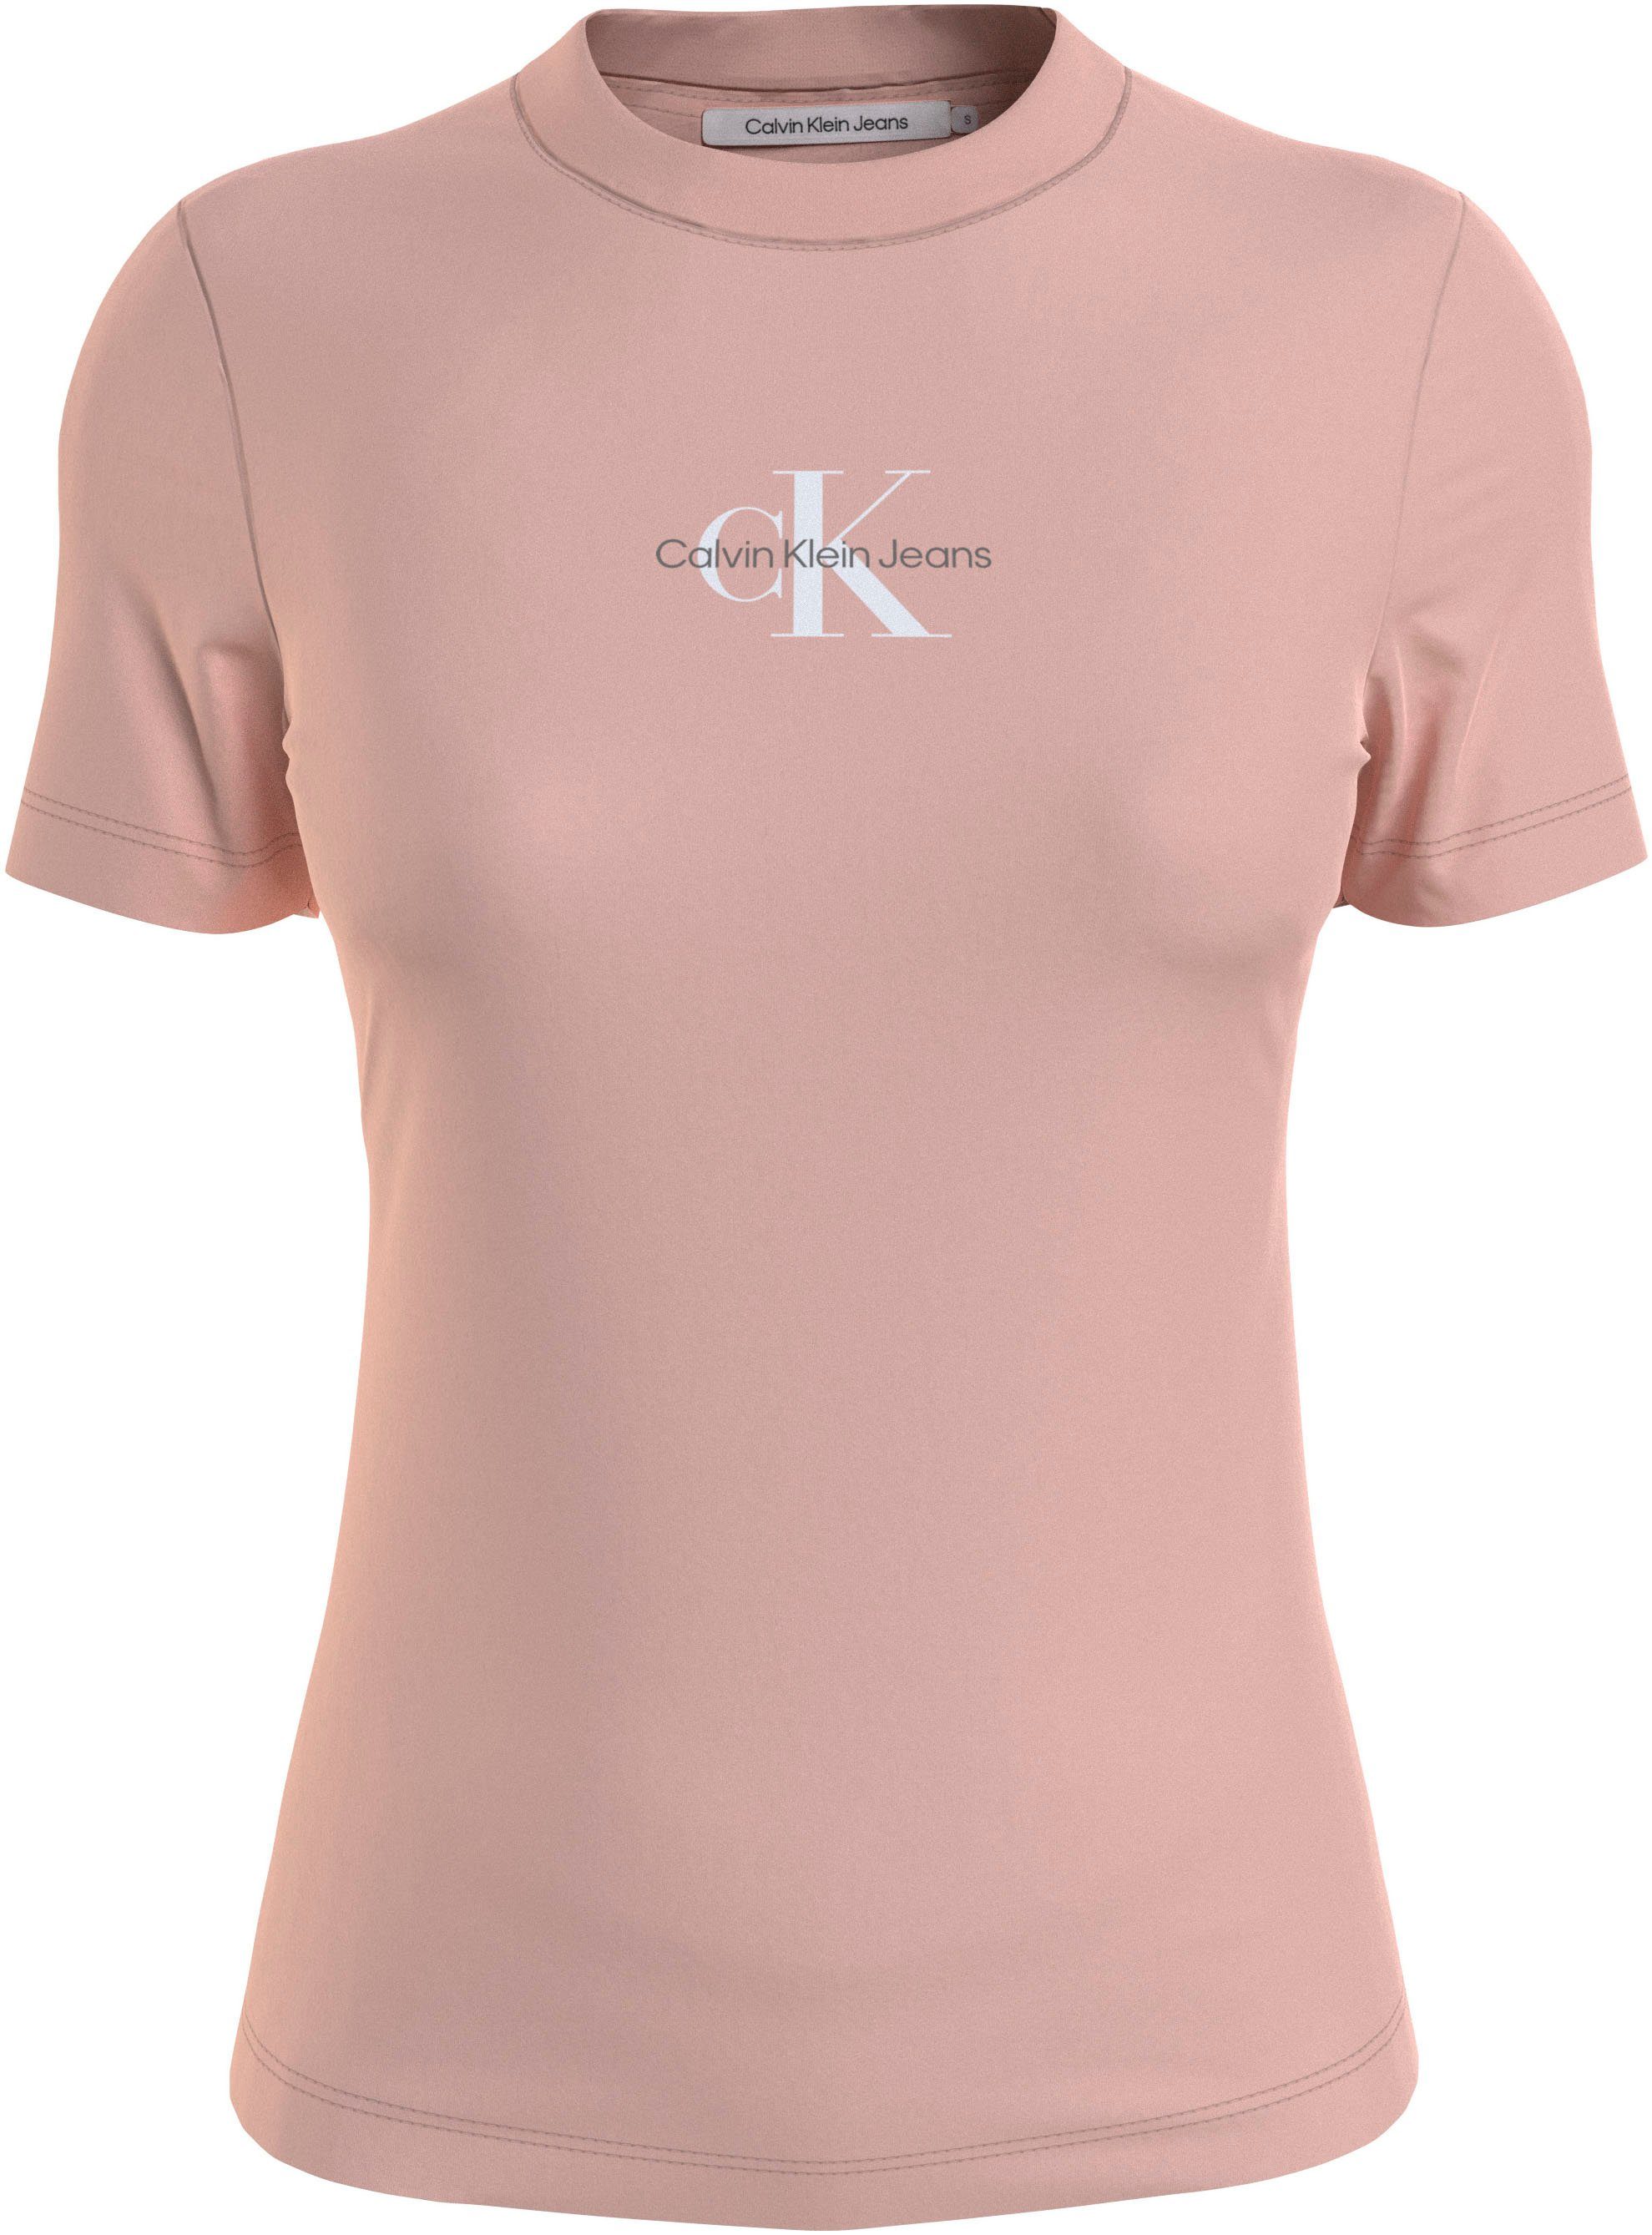 Calvin Klein Jeans T-Shirt MONOLOGO mit Faint Blossom FIT SLIM Logodruck TEE